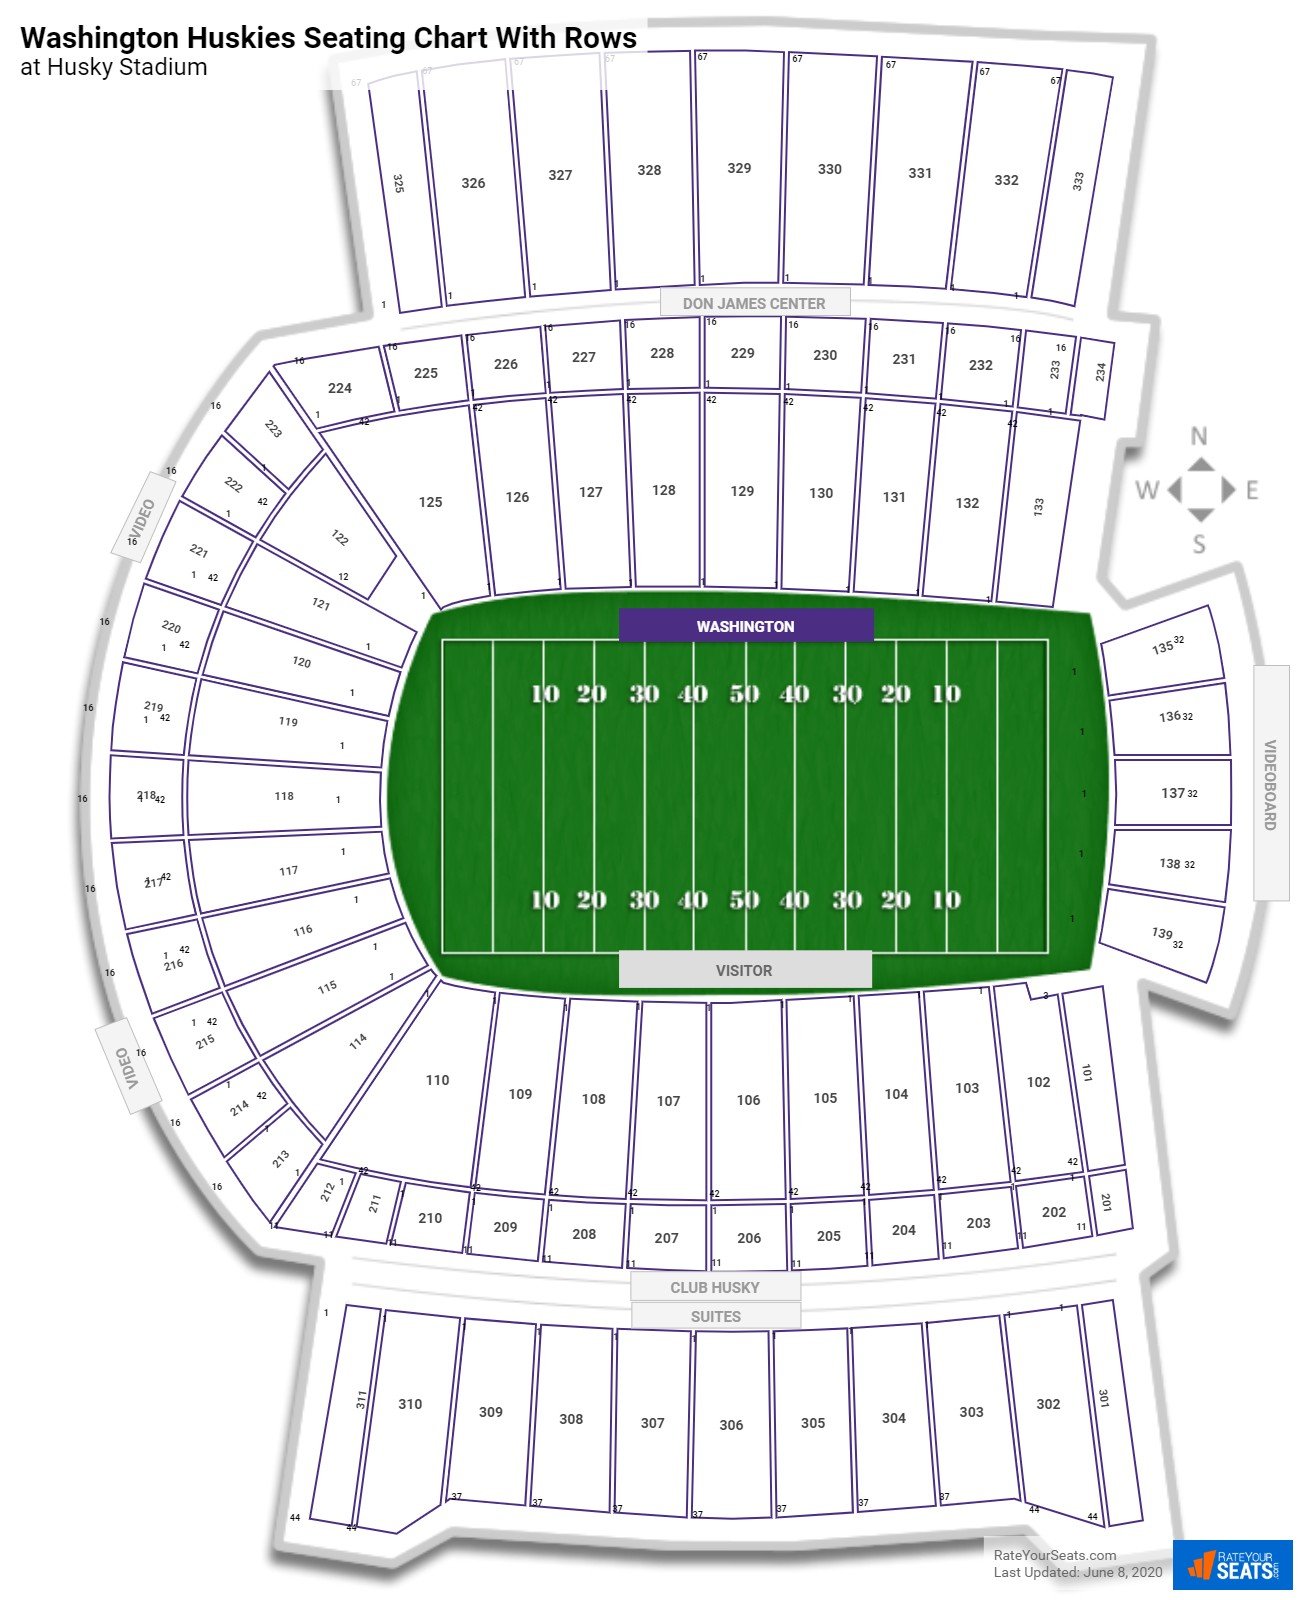 Husky Stadium seating chart with row numbers